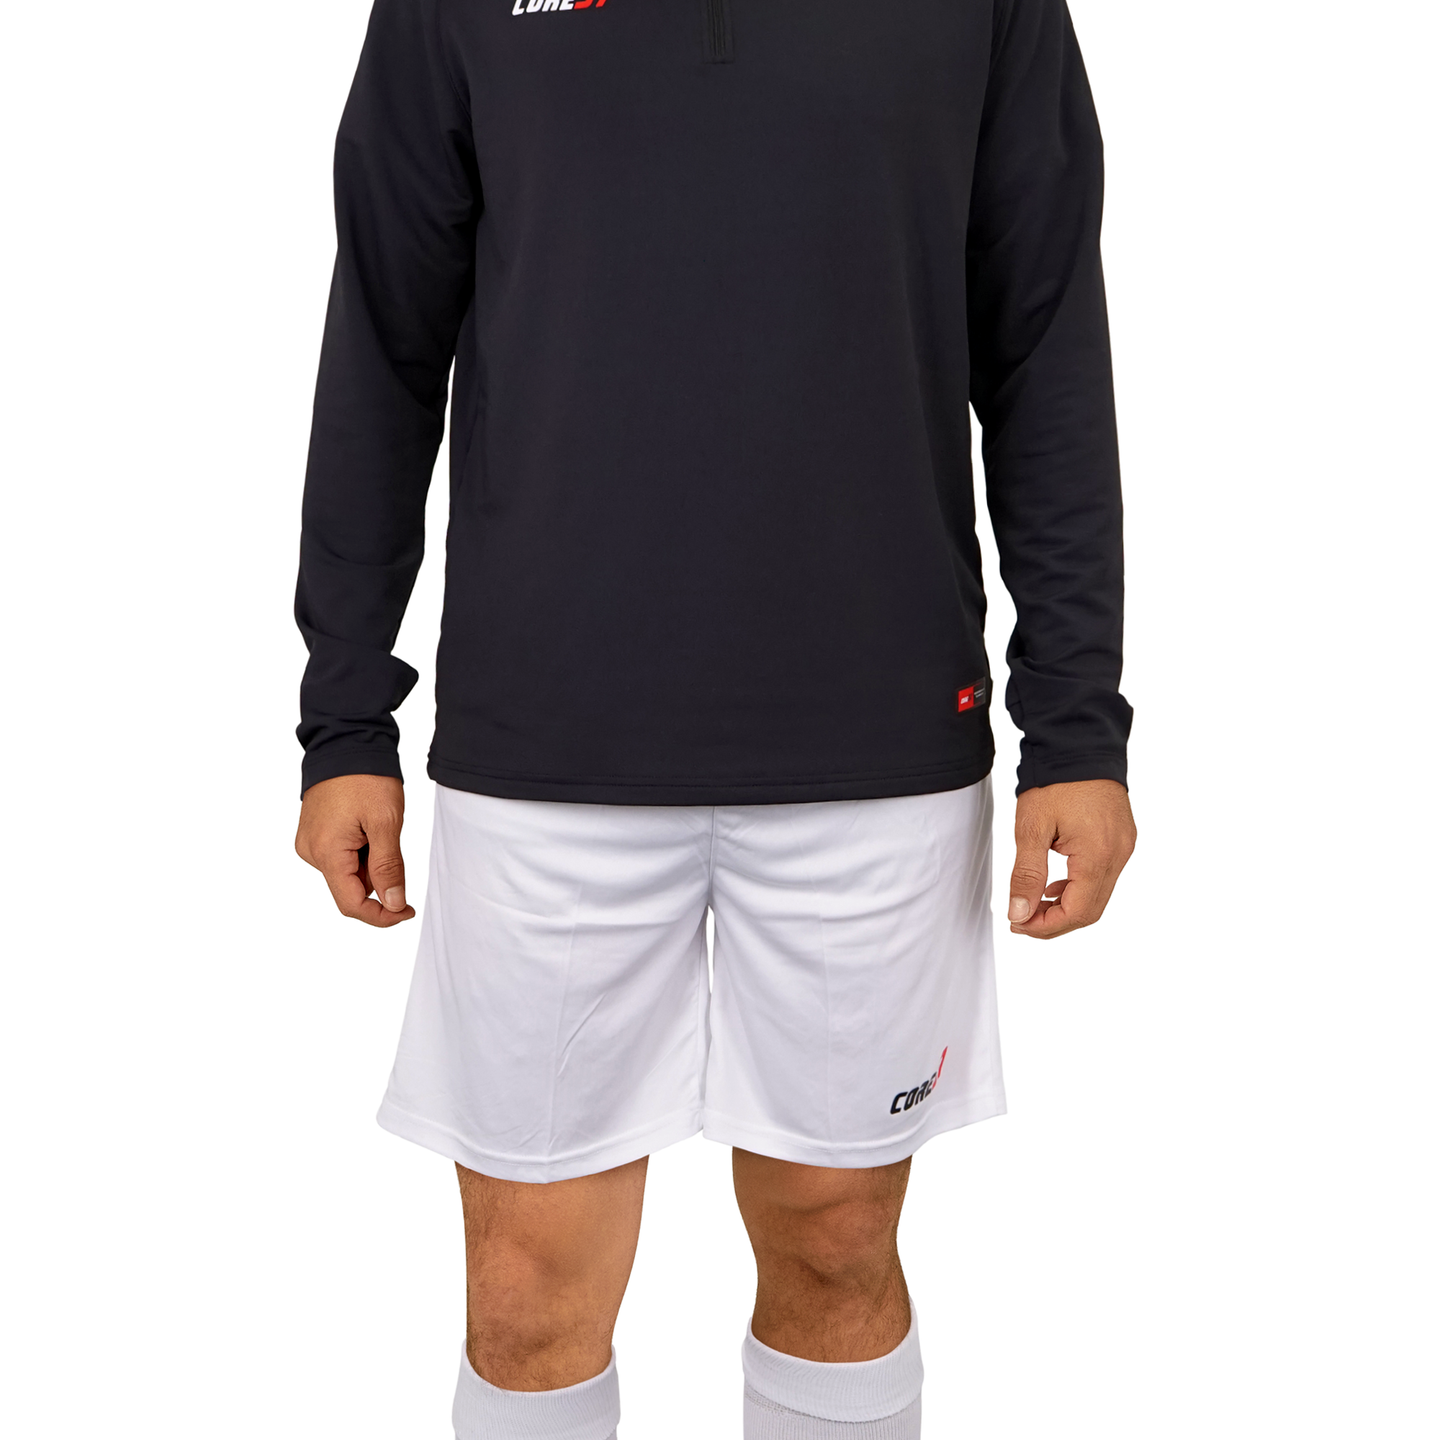 Essential Football Shorts - White